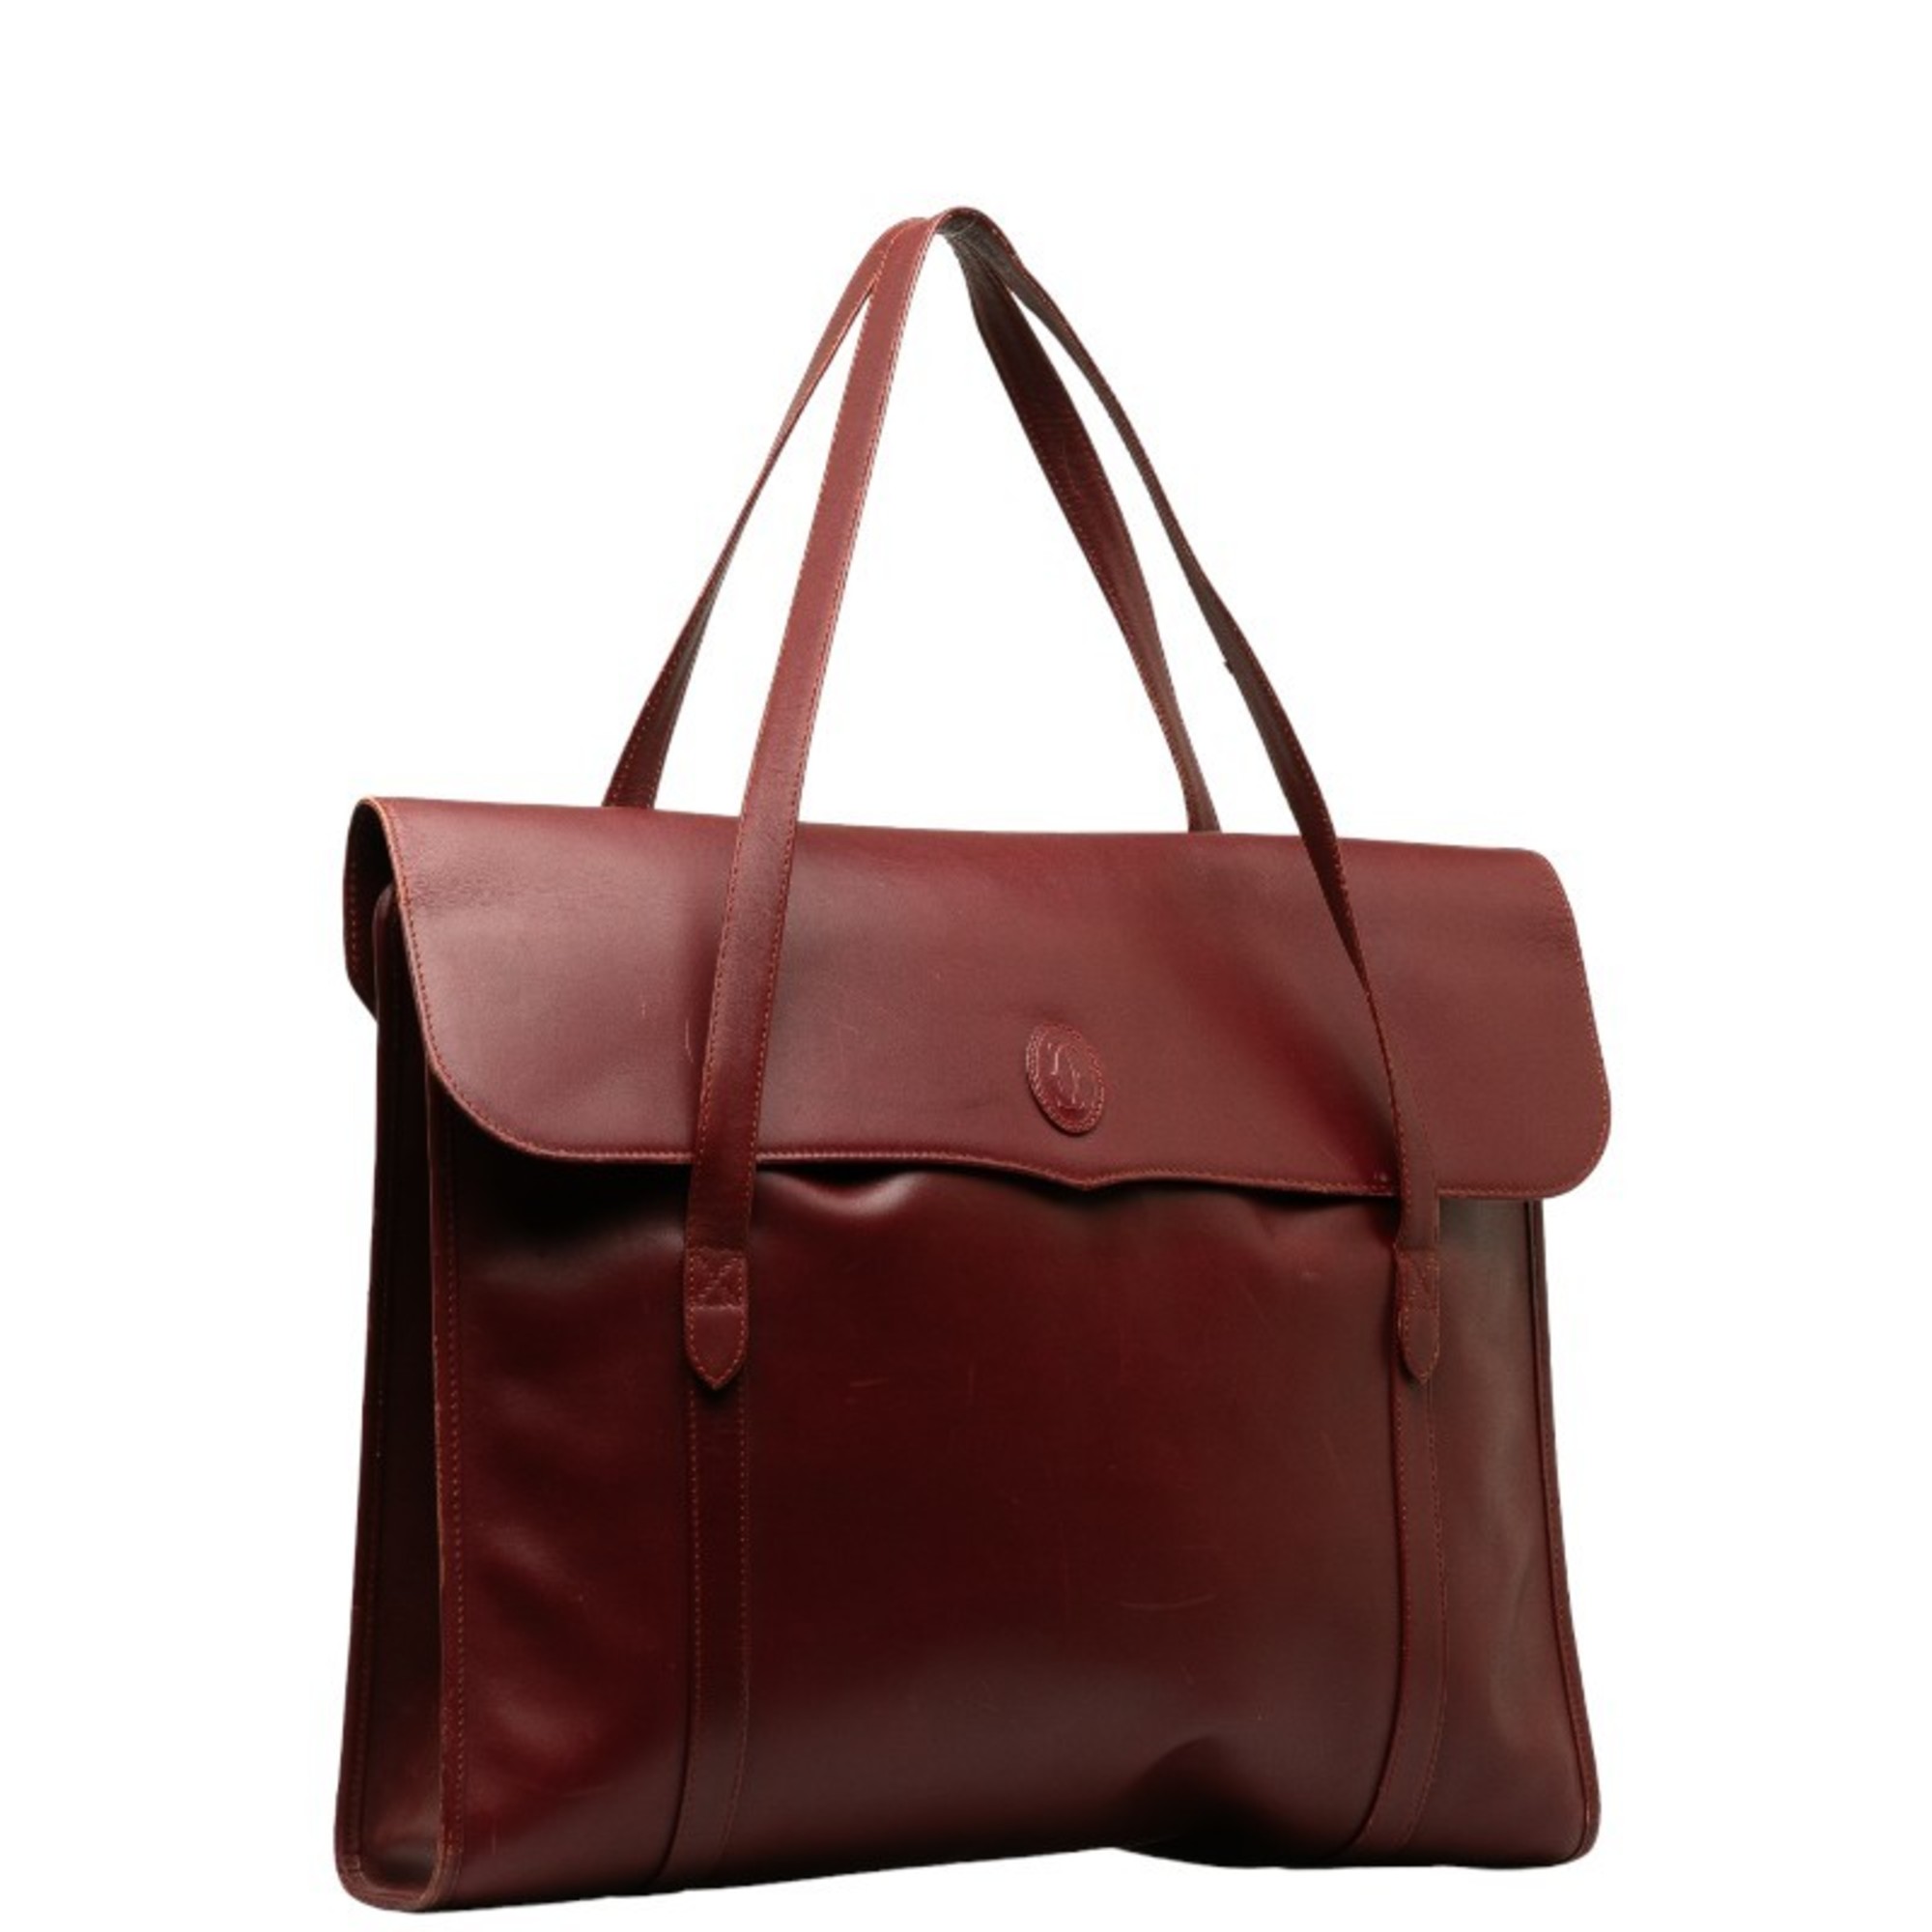 Cartier Must Line Tote Bag Handbag Bordeaux Wine Red Leather Women's CARTIER